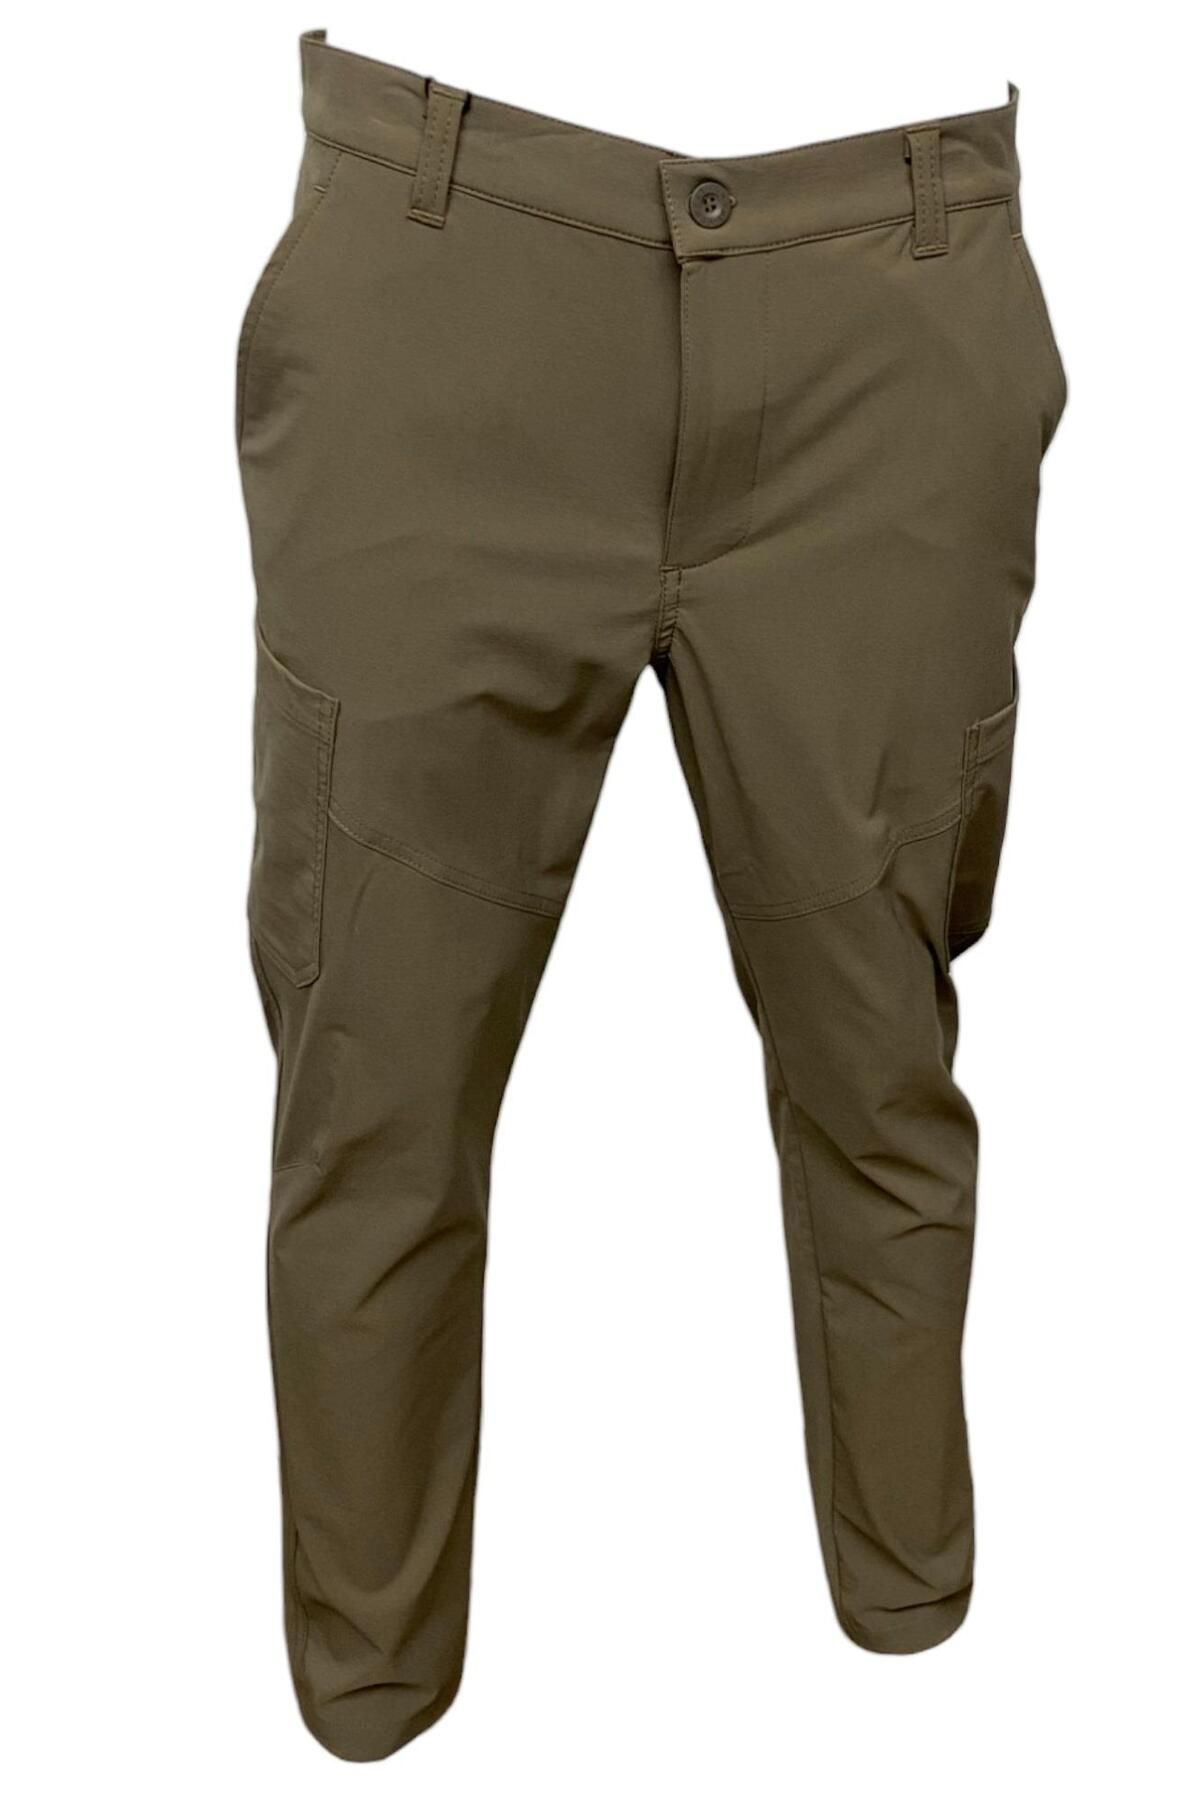 Combat Tactical Pantolon Comfort - 524 - N21